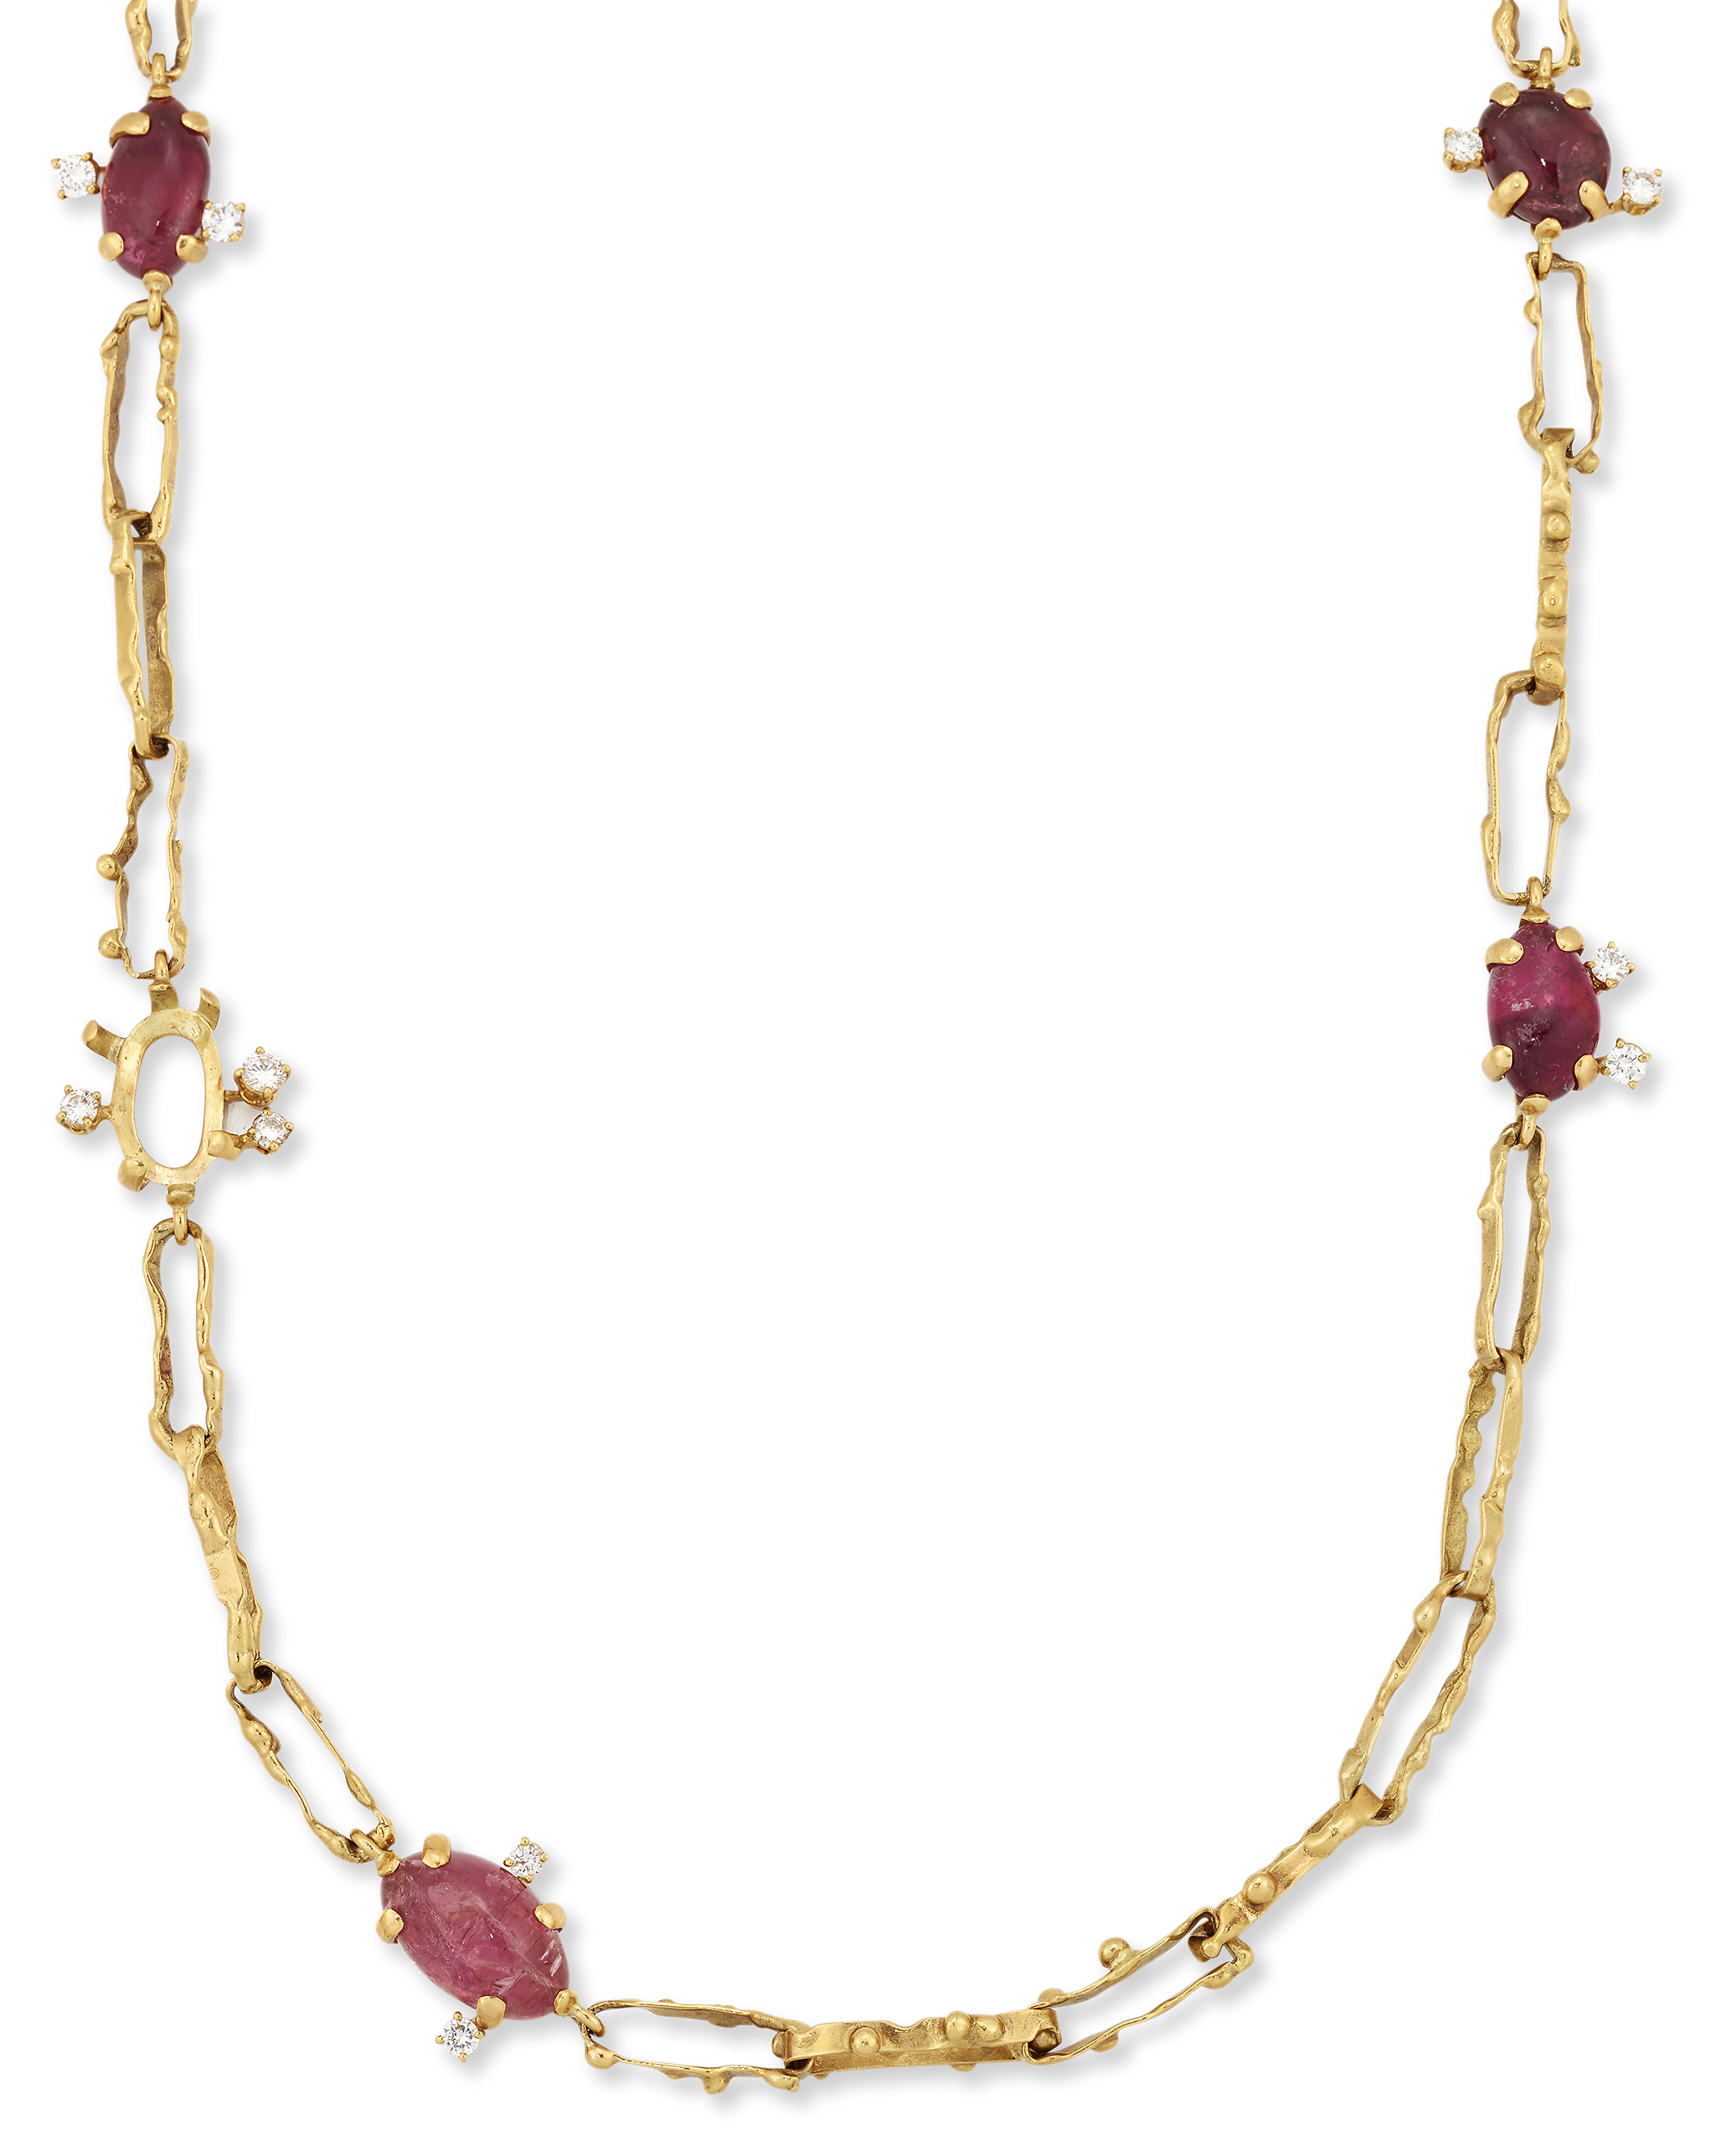 A pink tourmaline and diamond neckchain, a series of claw-set pink tourmaline cabochons (one defi...